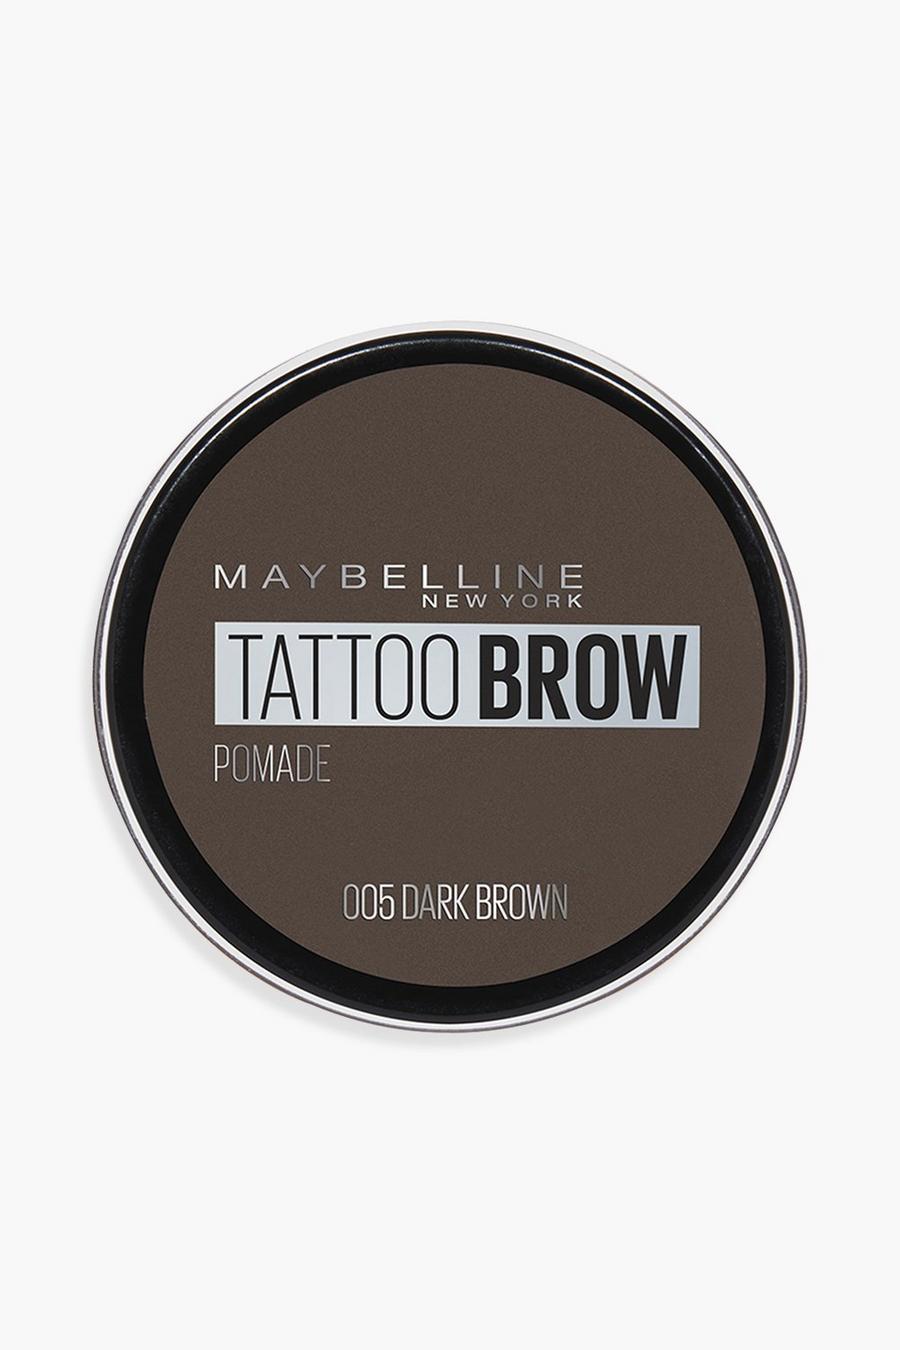 Crema tatuaje para cejas de Maybelline, 05 dark brown